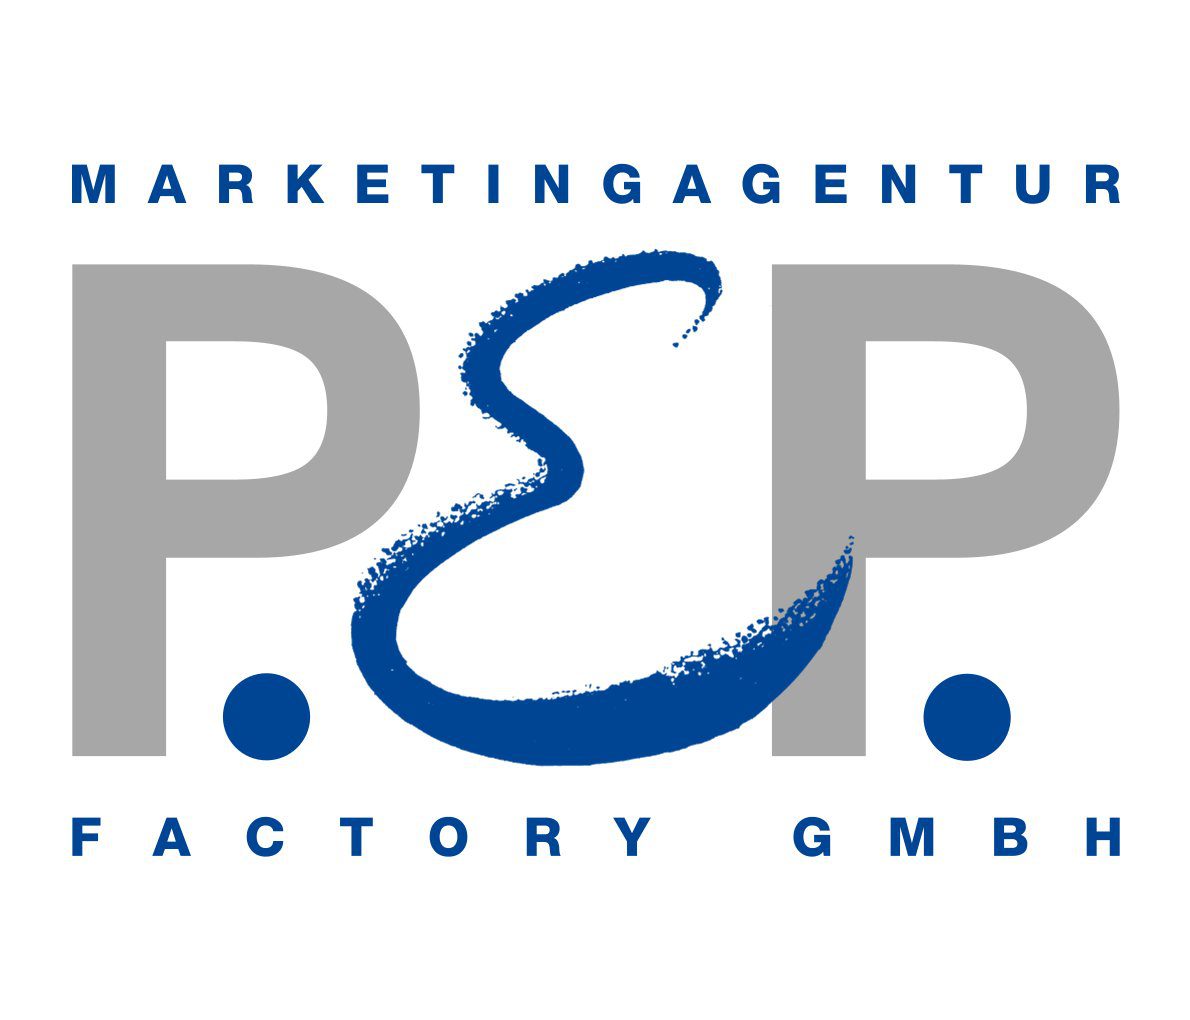 PEP Factory GmbH